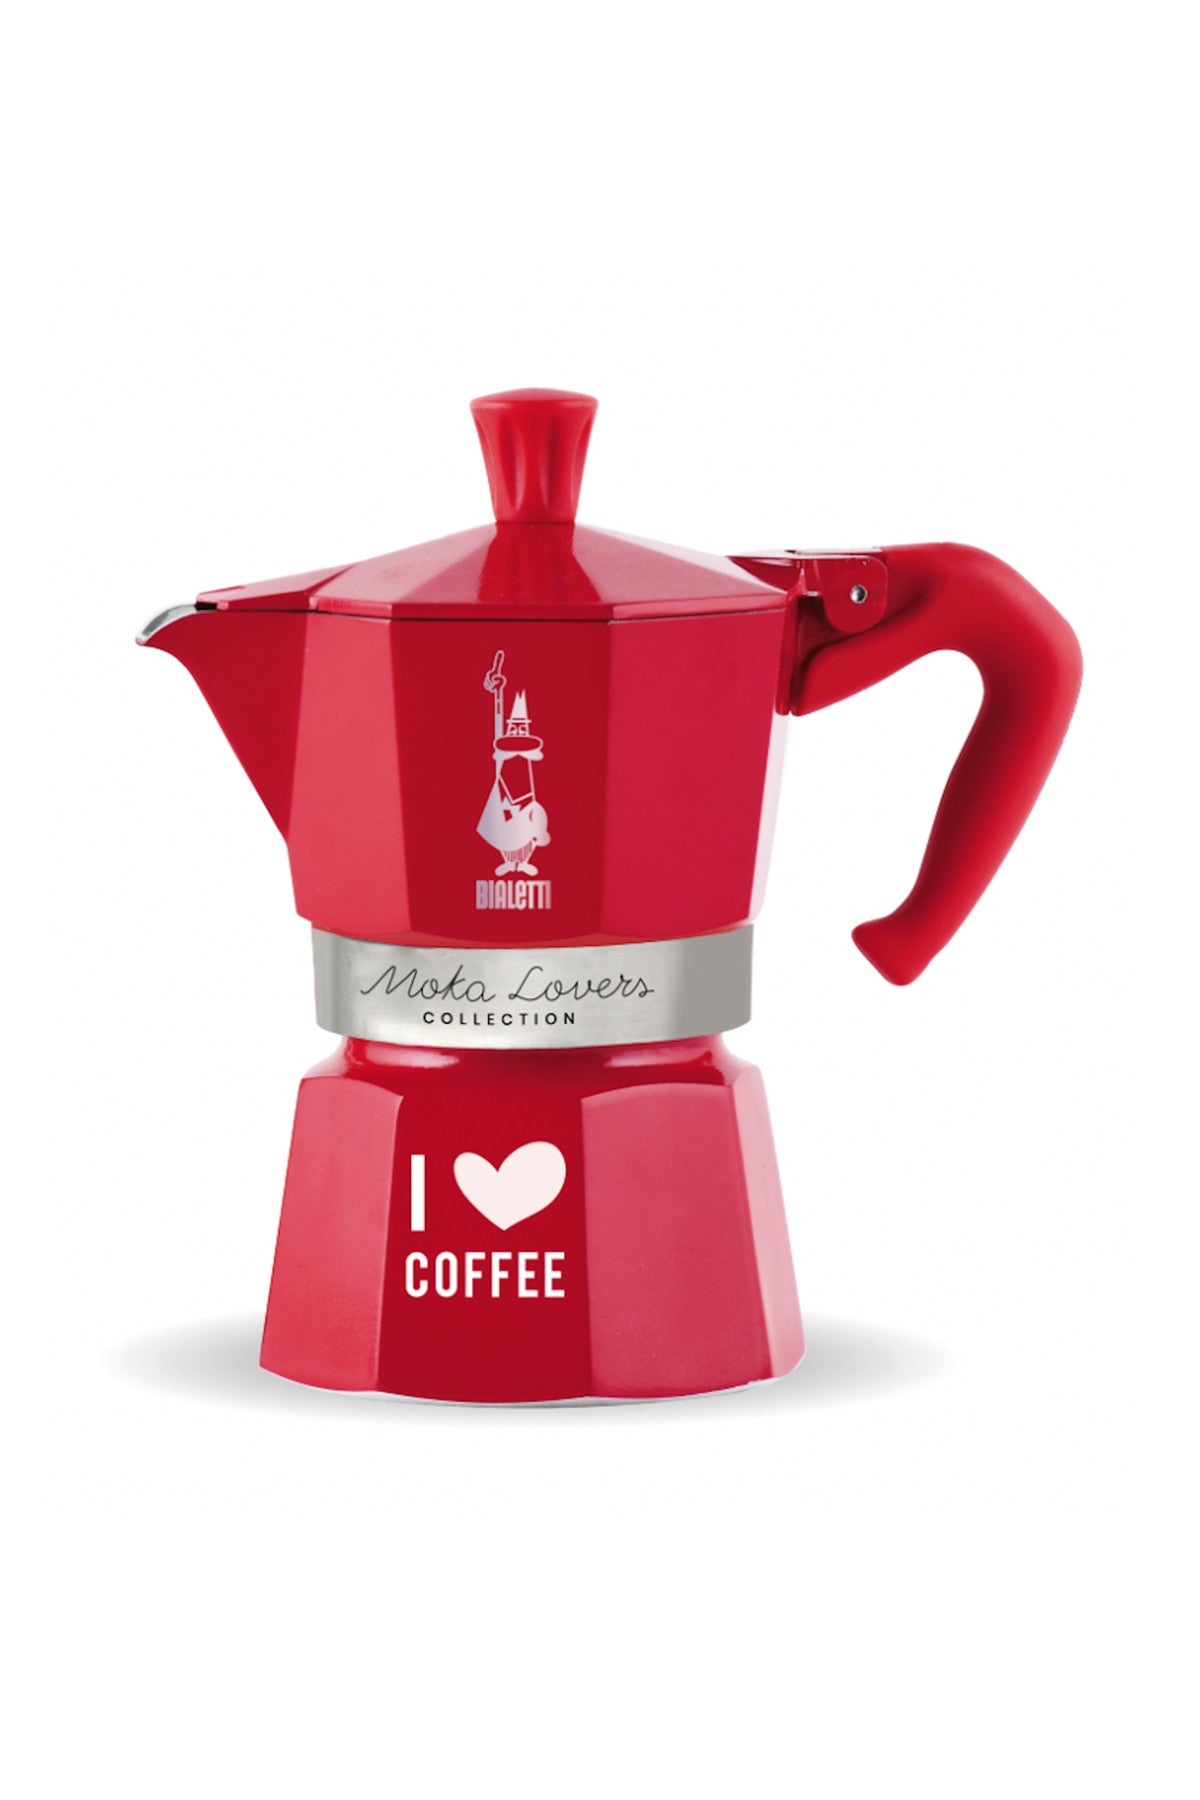 MOKA EXPRESS RED 6 CUPS, I Love Coffee